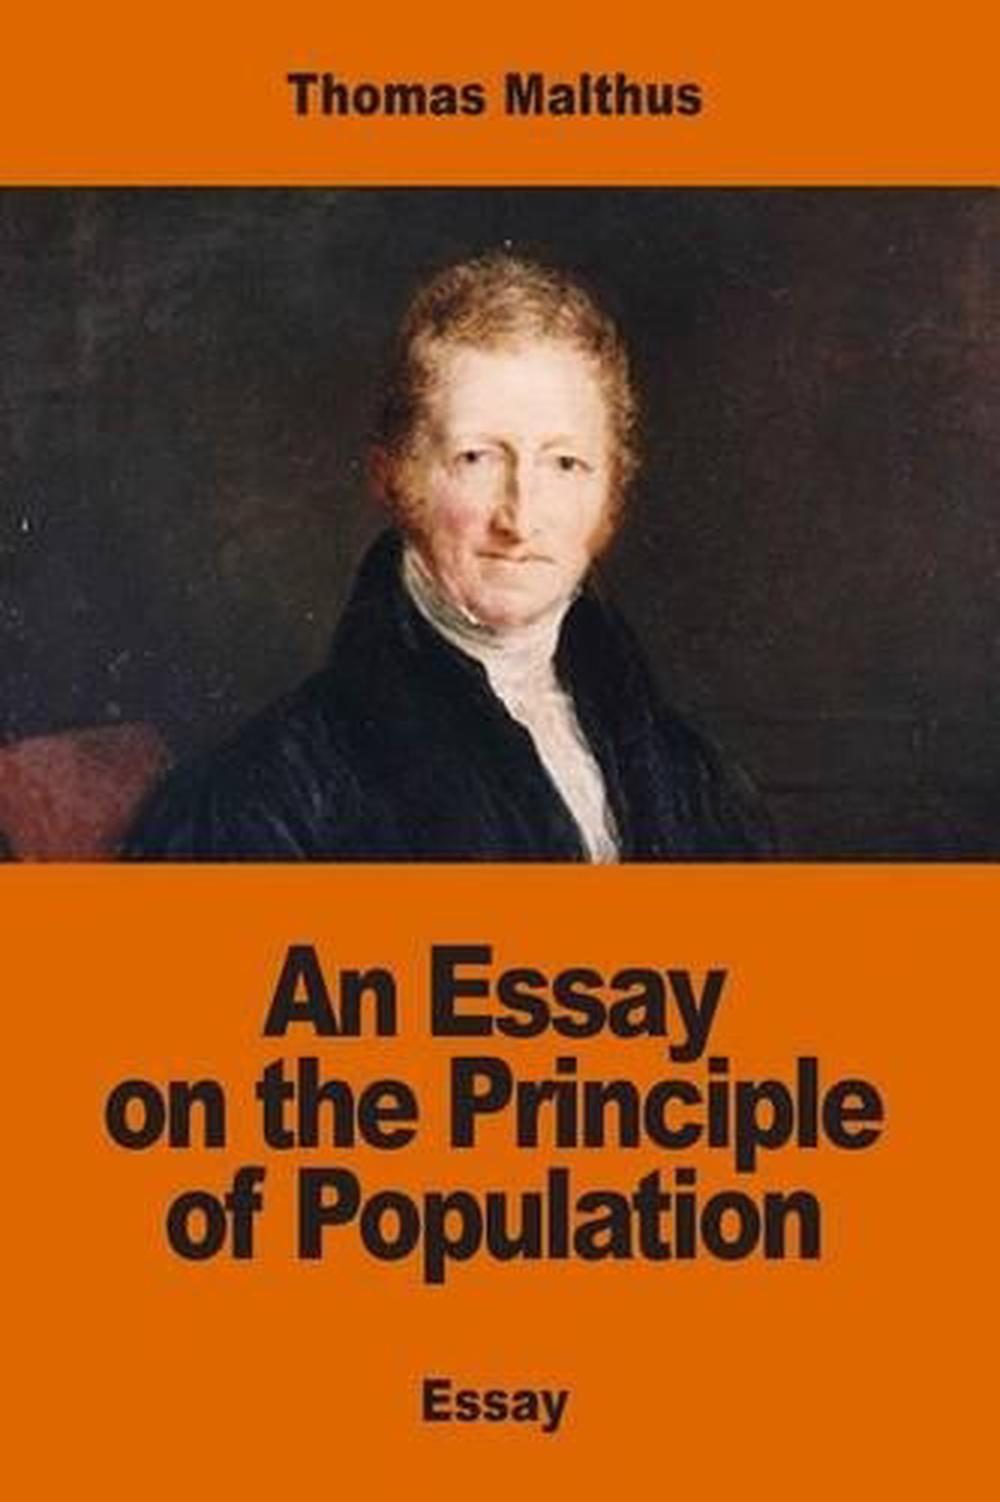 an essay on the principle of population thomas malthus